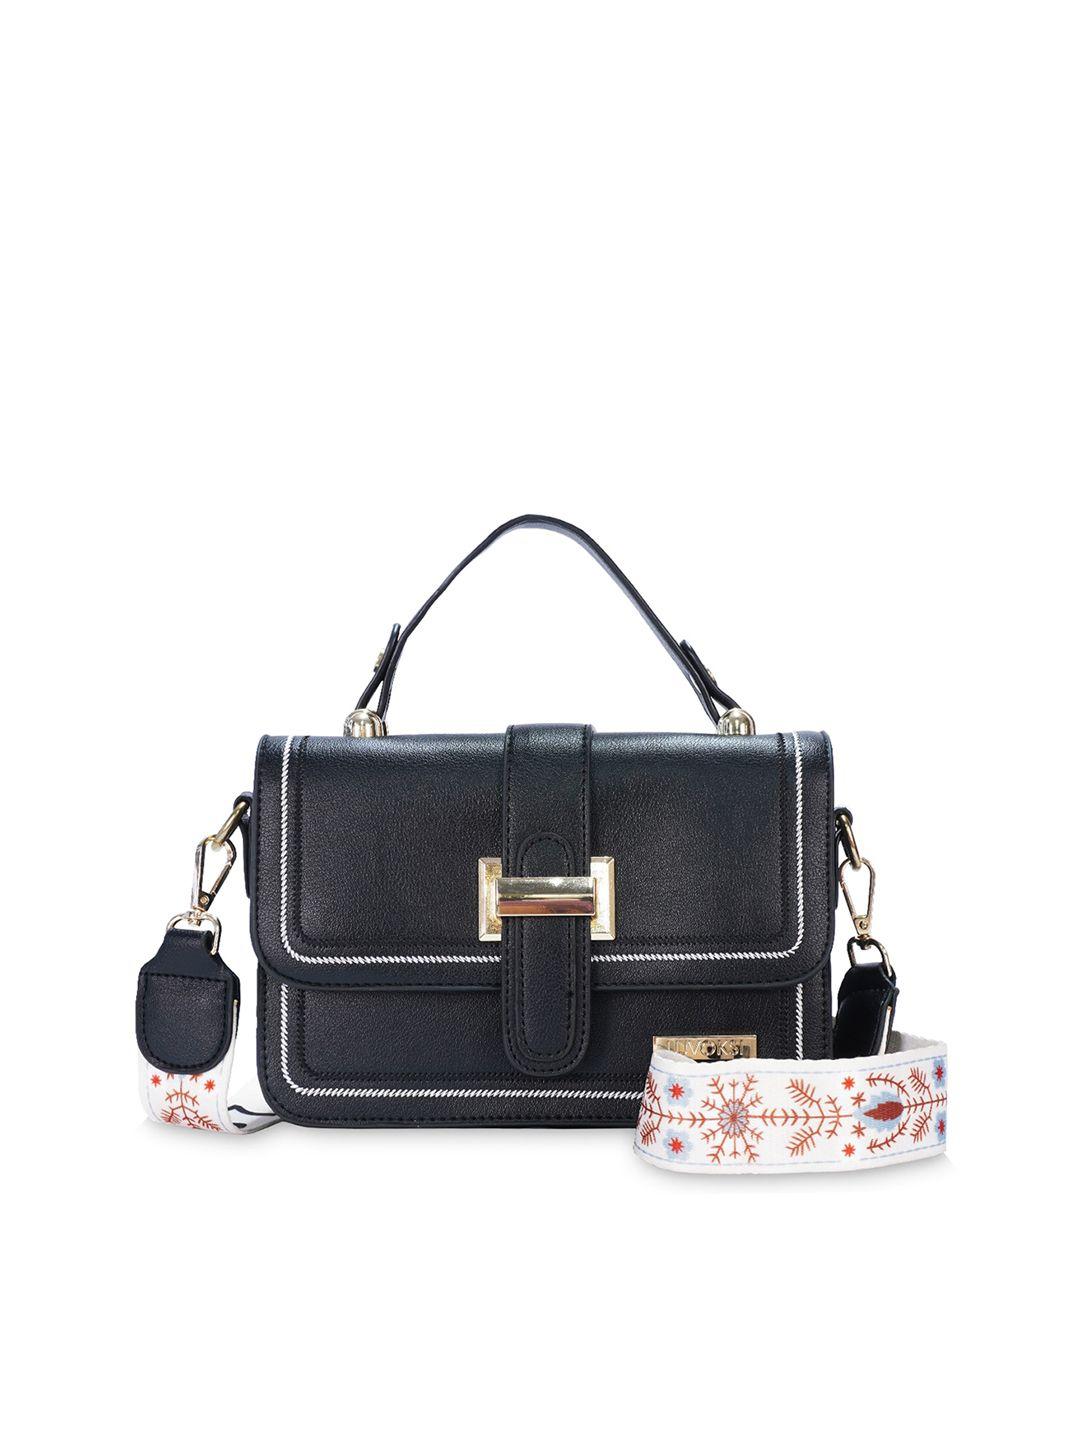 luvoksi black pu structured satchel with detachable strap